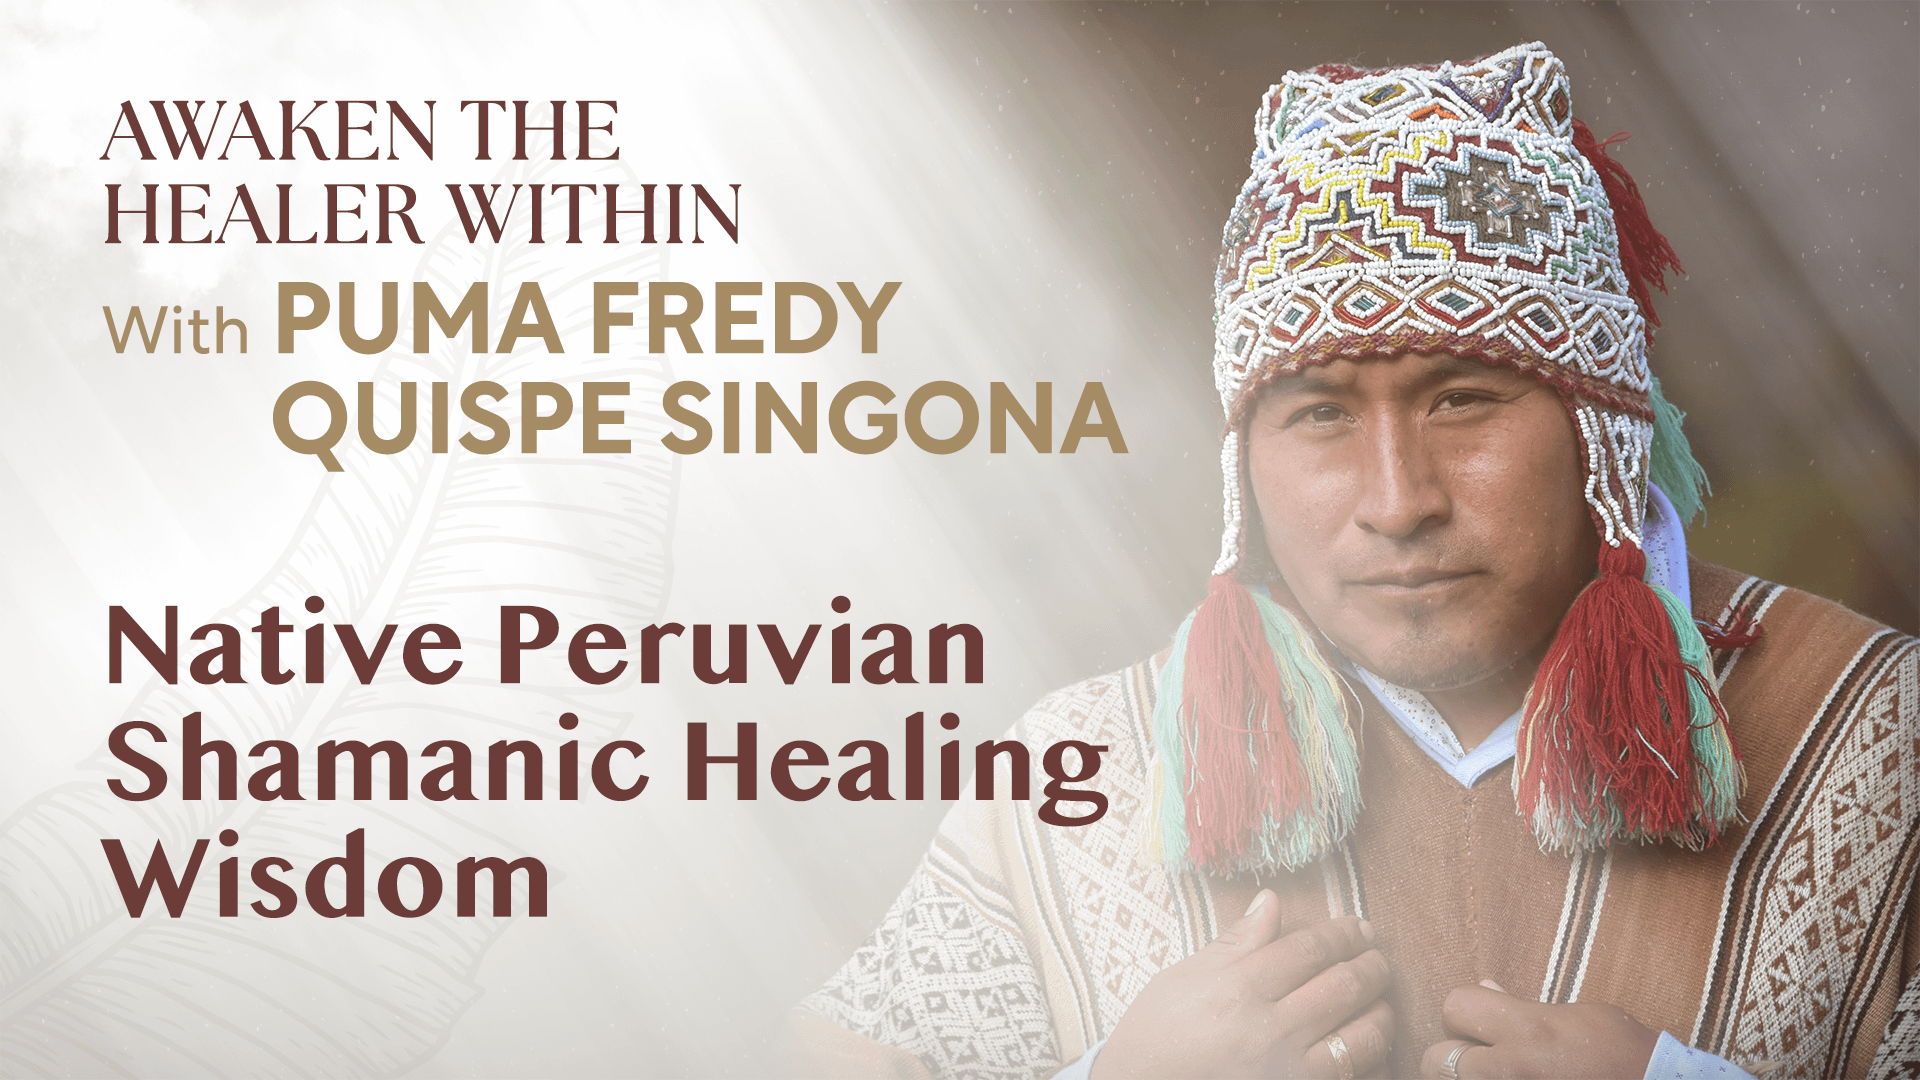 Native Peruvian Shamanic Healing Wisdom